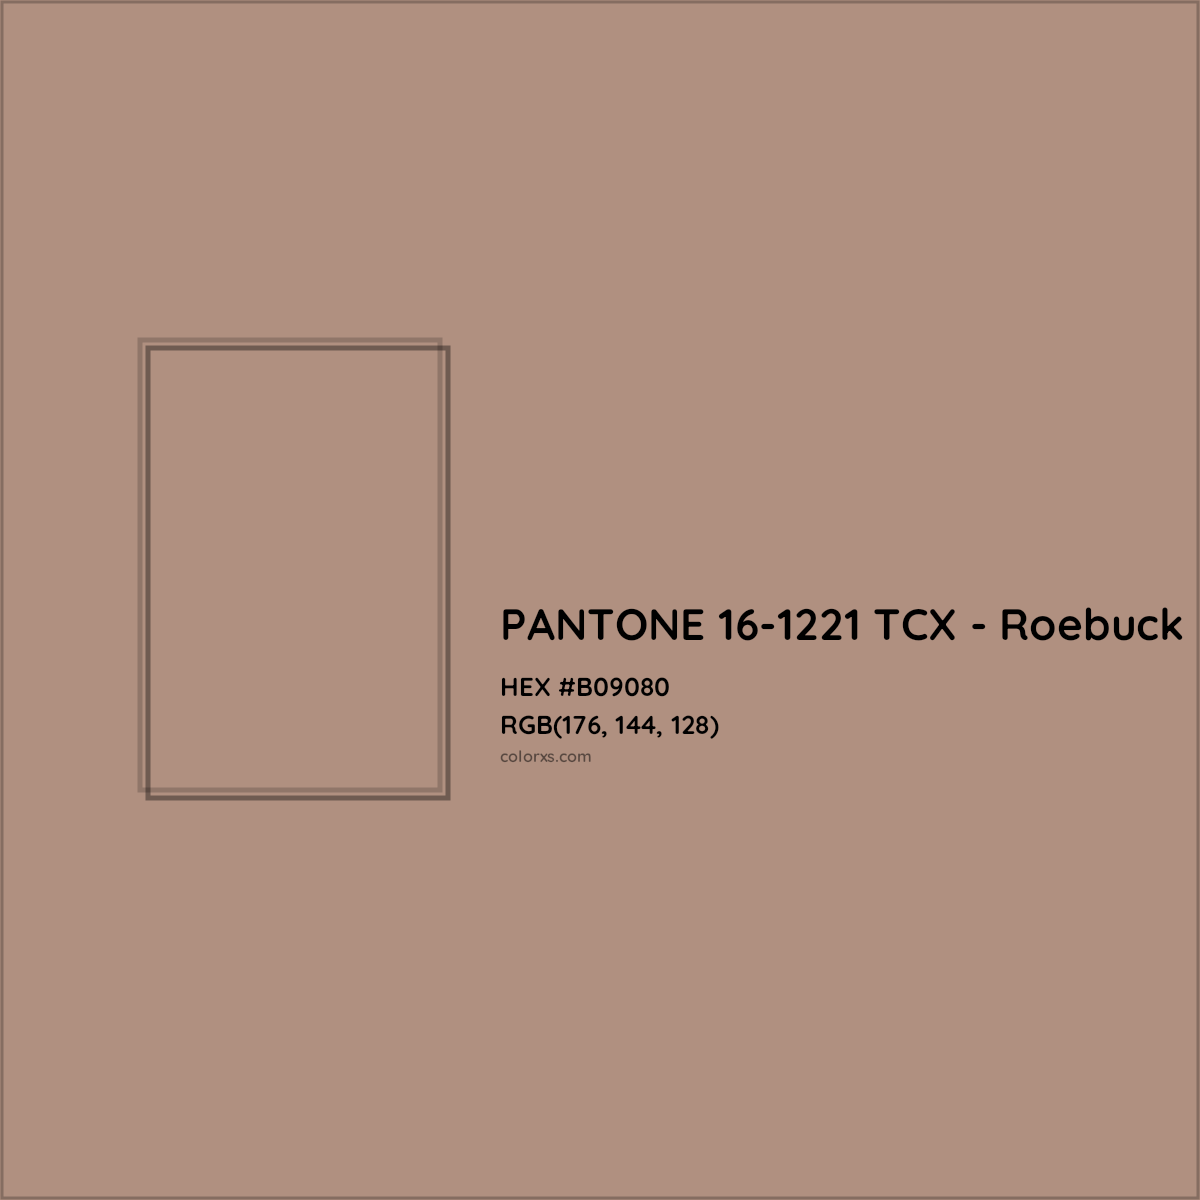 HEX #B09080 PANTONE 16-1221 TCX - Roebuck CMS Pantone TCX - Color Code